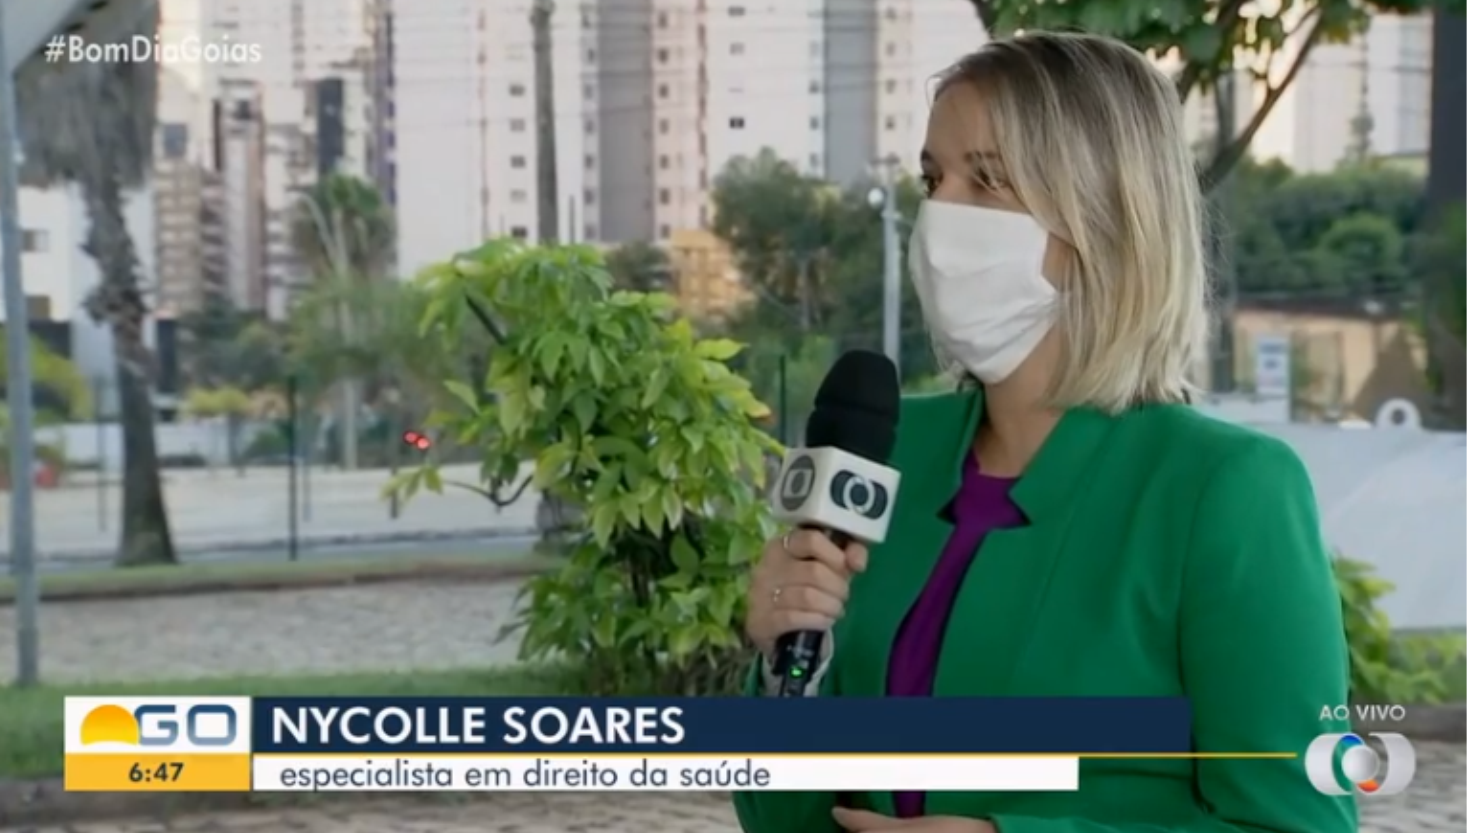 Entrevista Nycolle Soares ao Bom Dia Goiás sobre aumento da adesão aos Planos de Saúde durante a Pandemia.